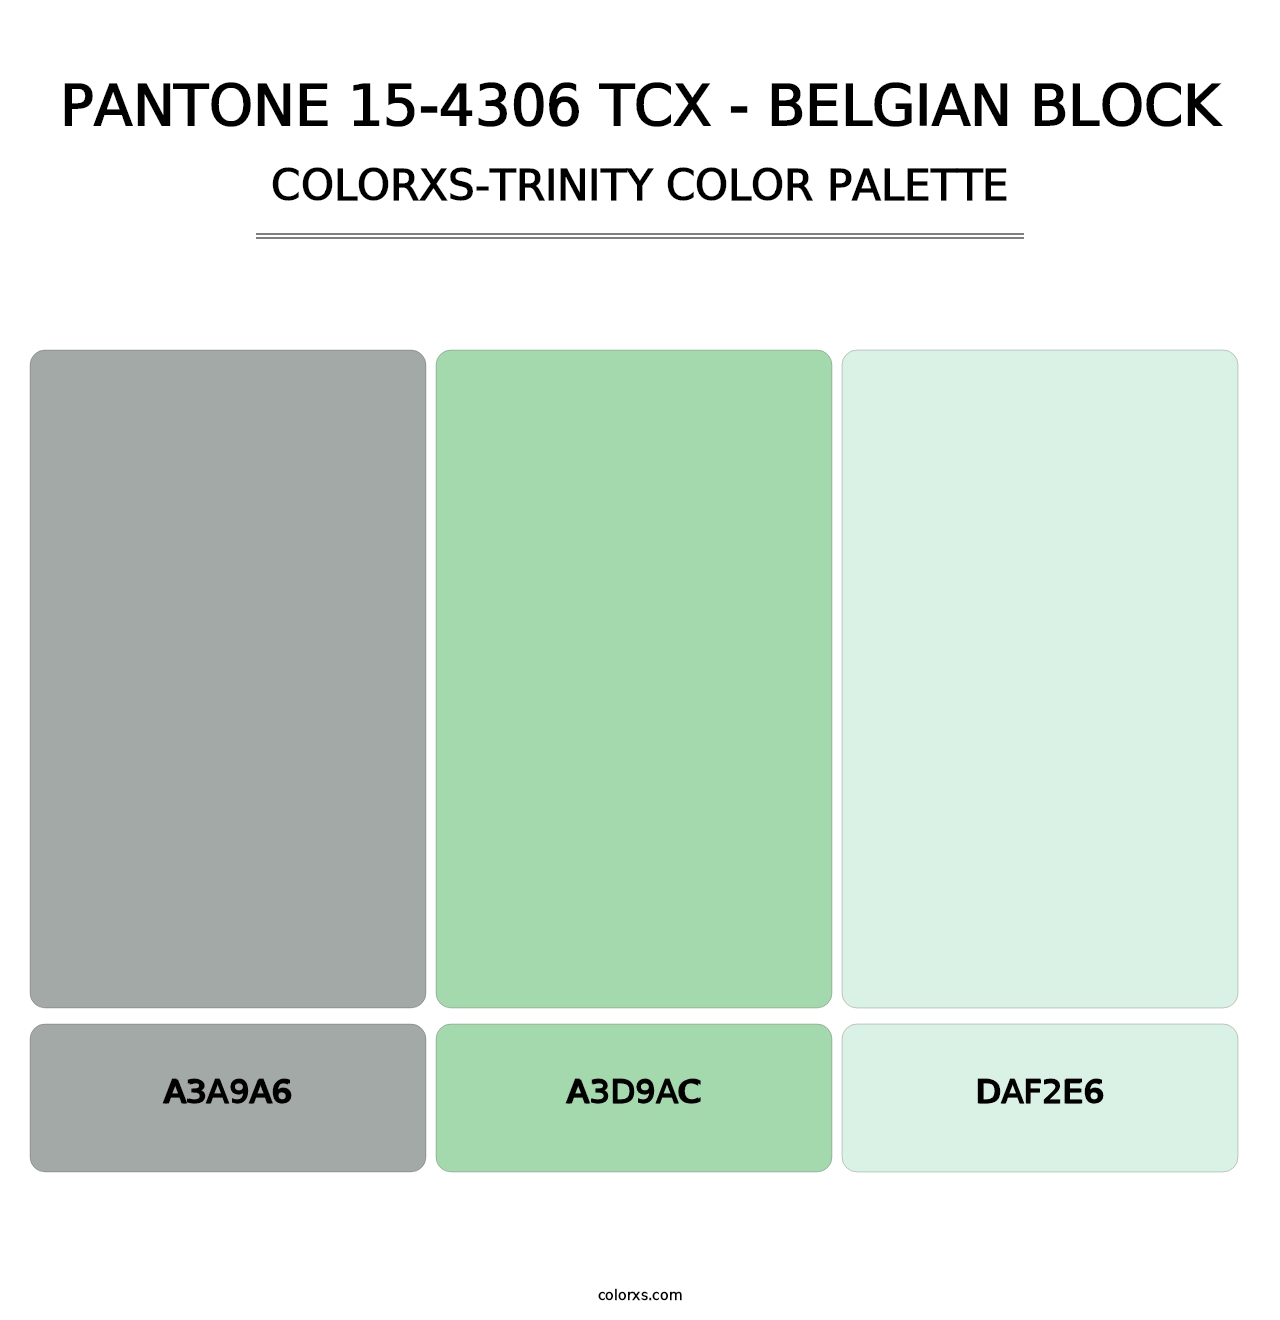 PANTONE 15-4306 TCX - Belgian Block - Colorxs Trinity Palette